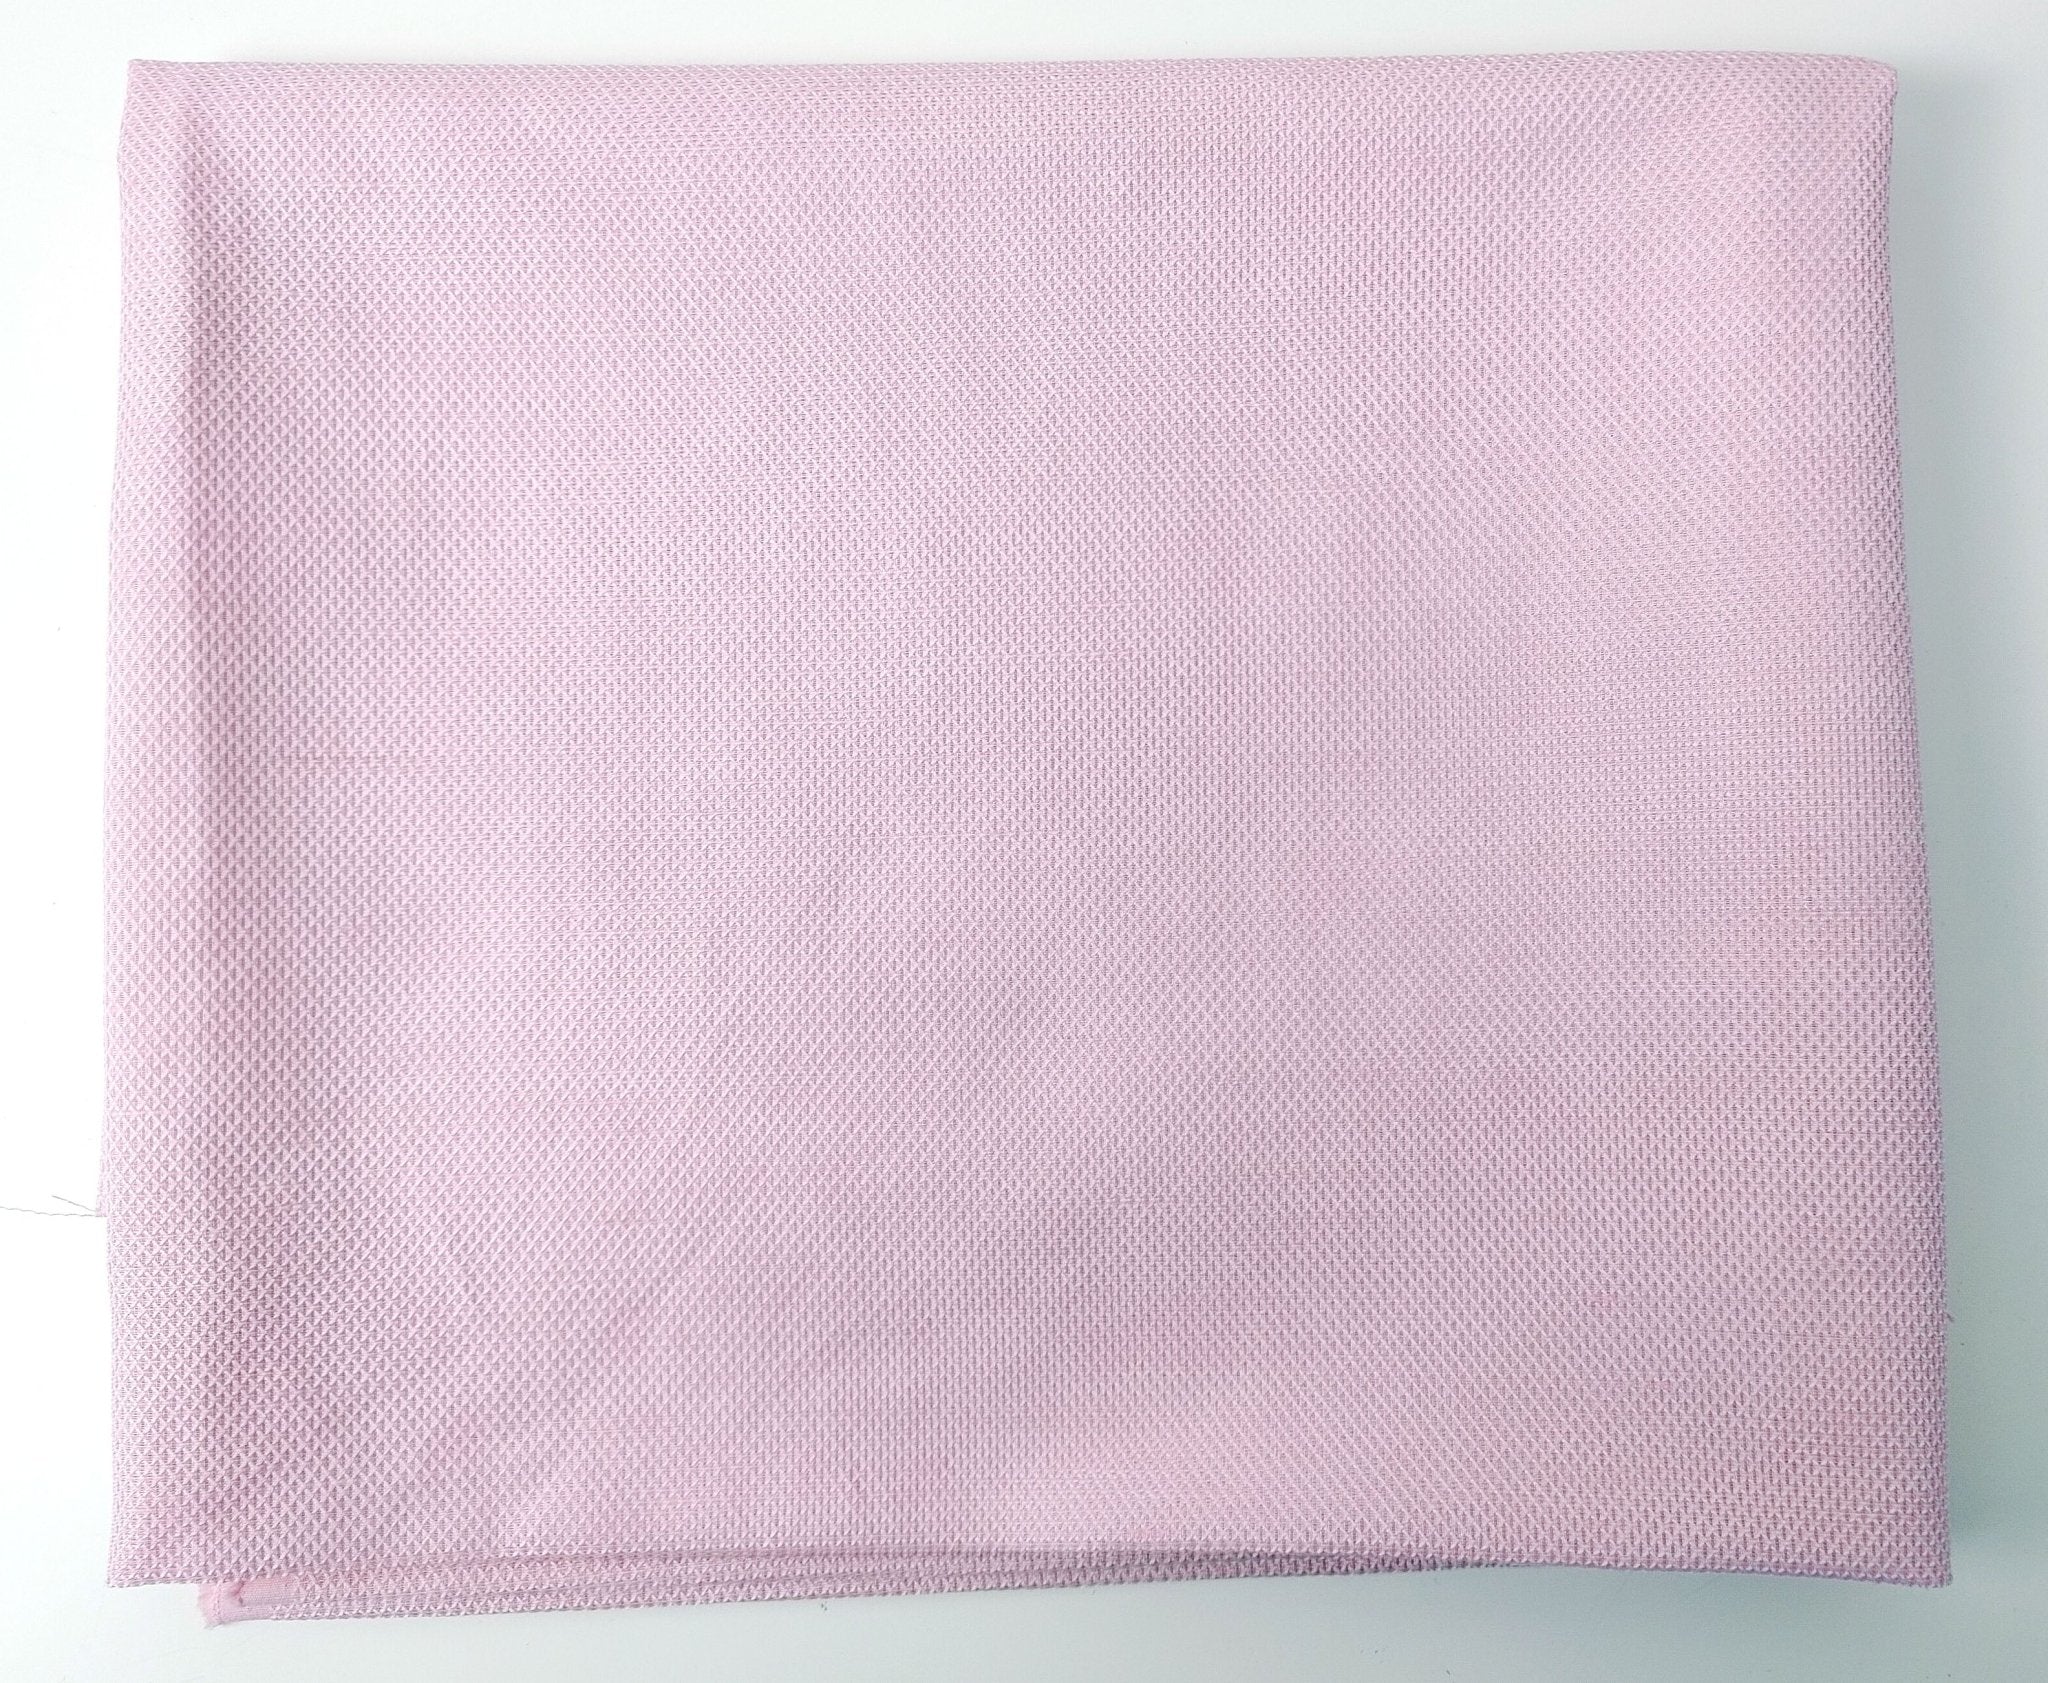 Linen Cotton Rhombus Shape Fabric - Special V-Heald 4350 4349 4348 4347 - The Linen Lab - White